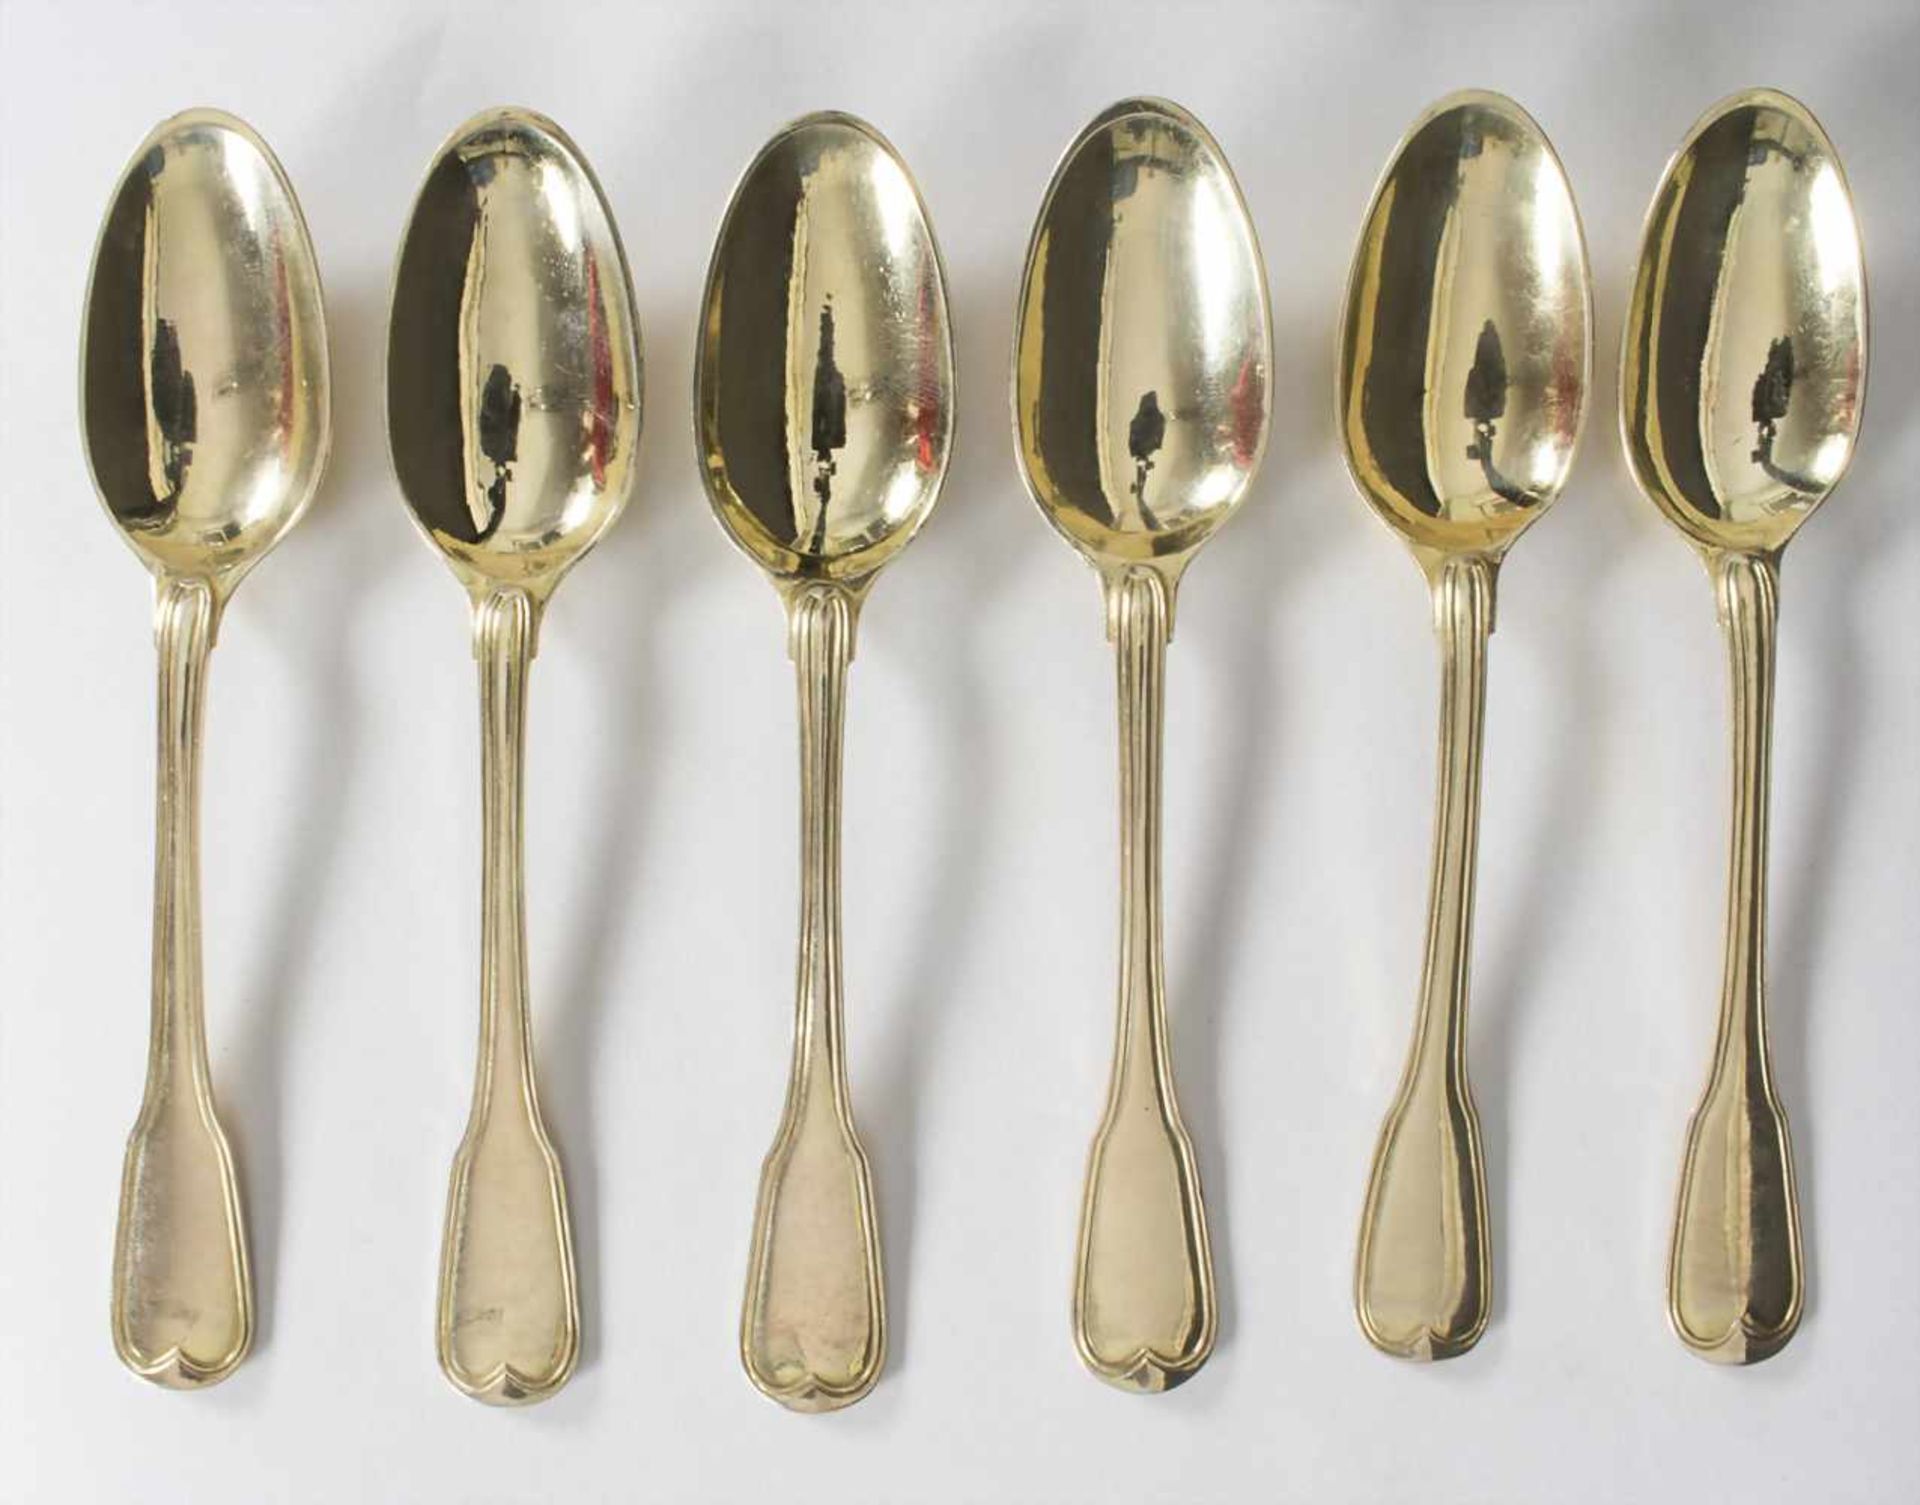 6 Teelöffel / 6 silver tea spoons, Jakob Heinrich Alberti, Straßburg / Strasbourg, um